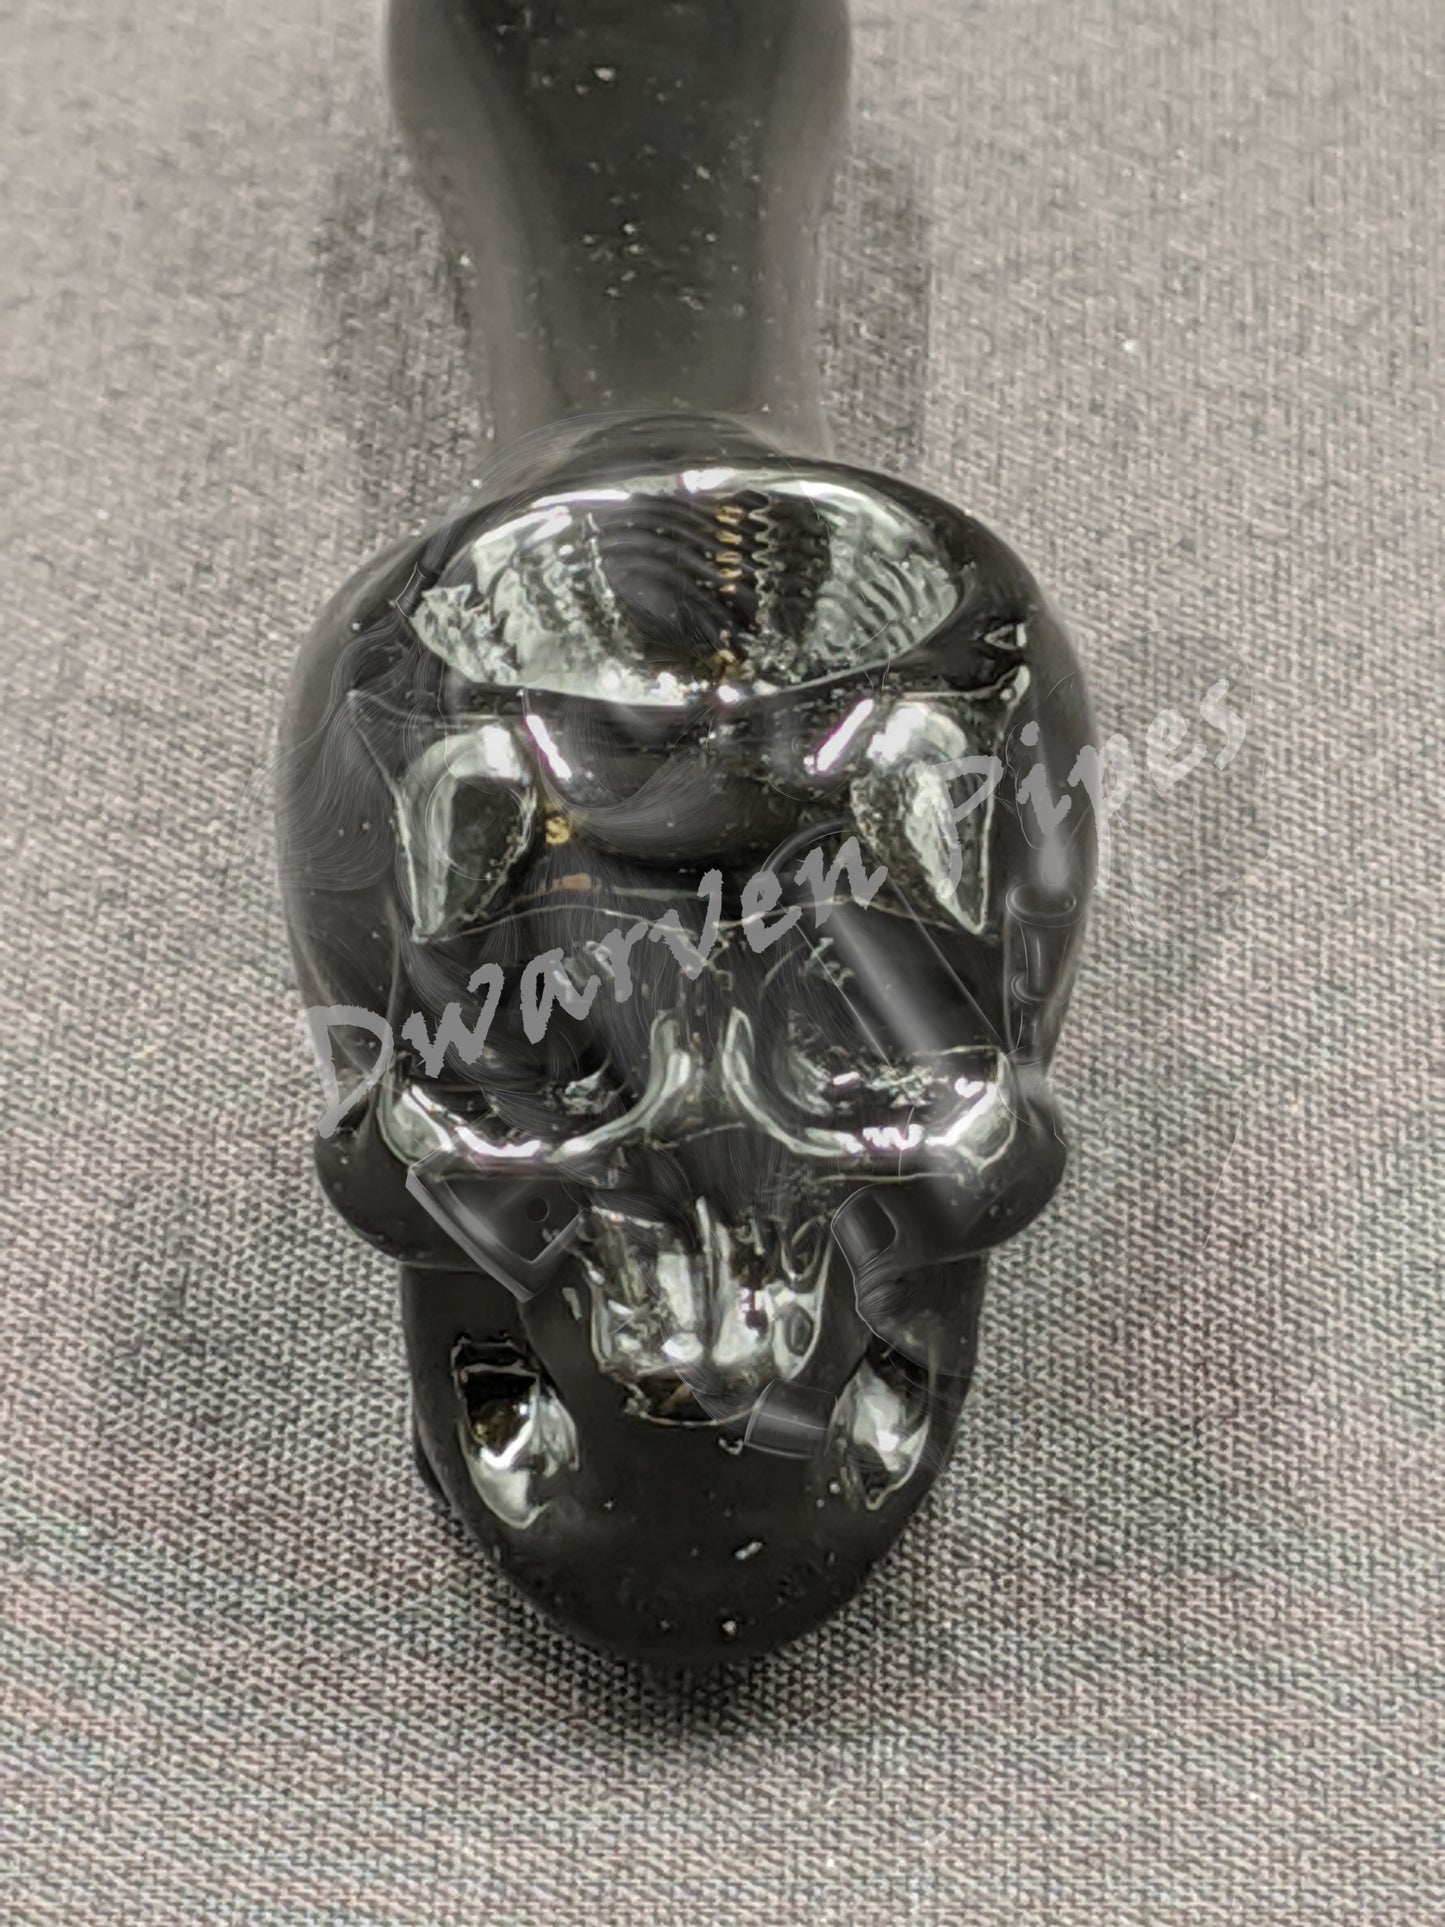 4" Glass Spoon Skull Black